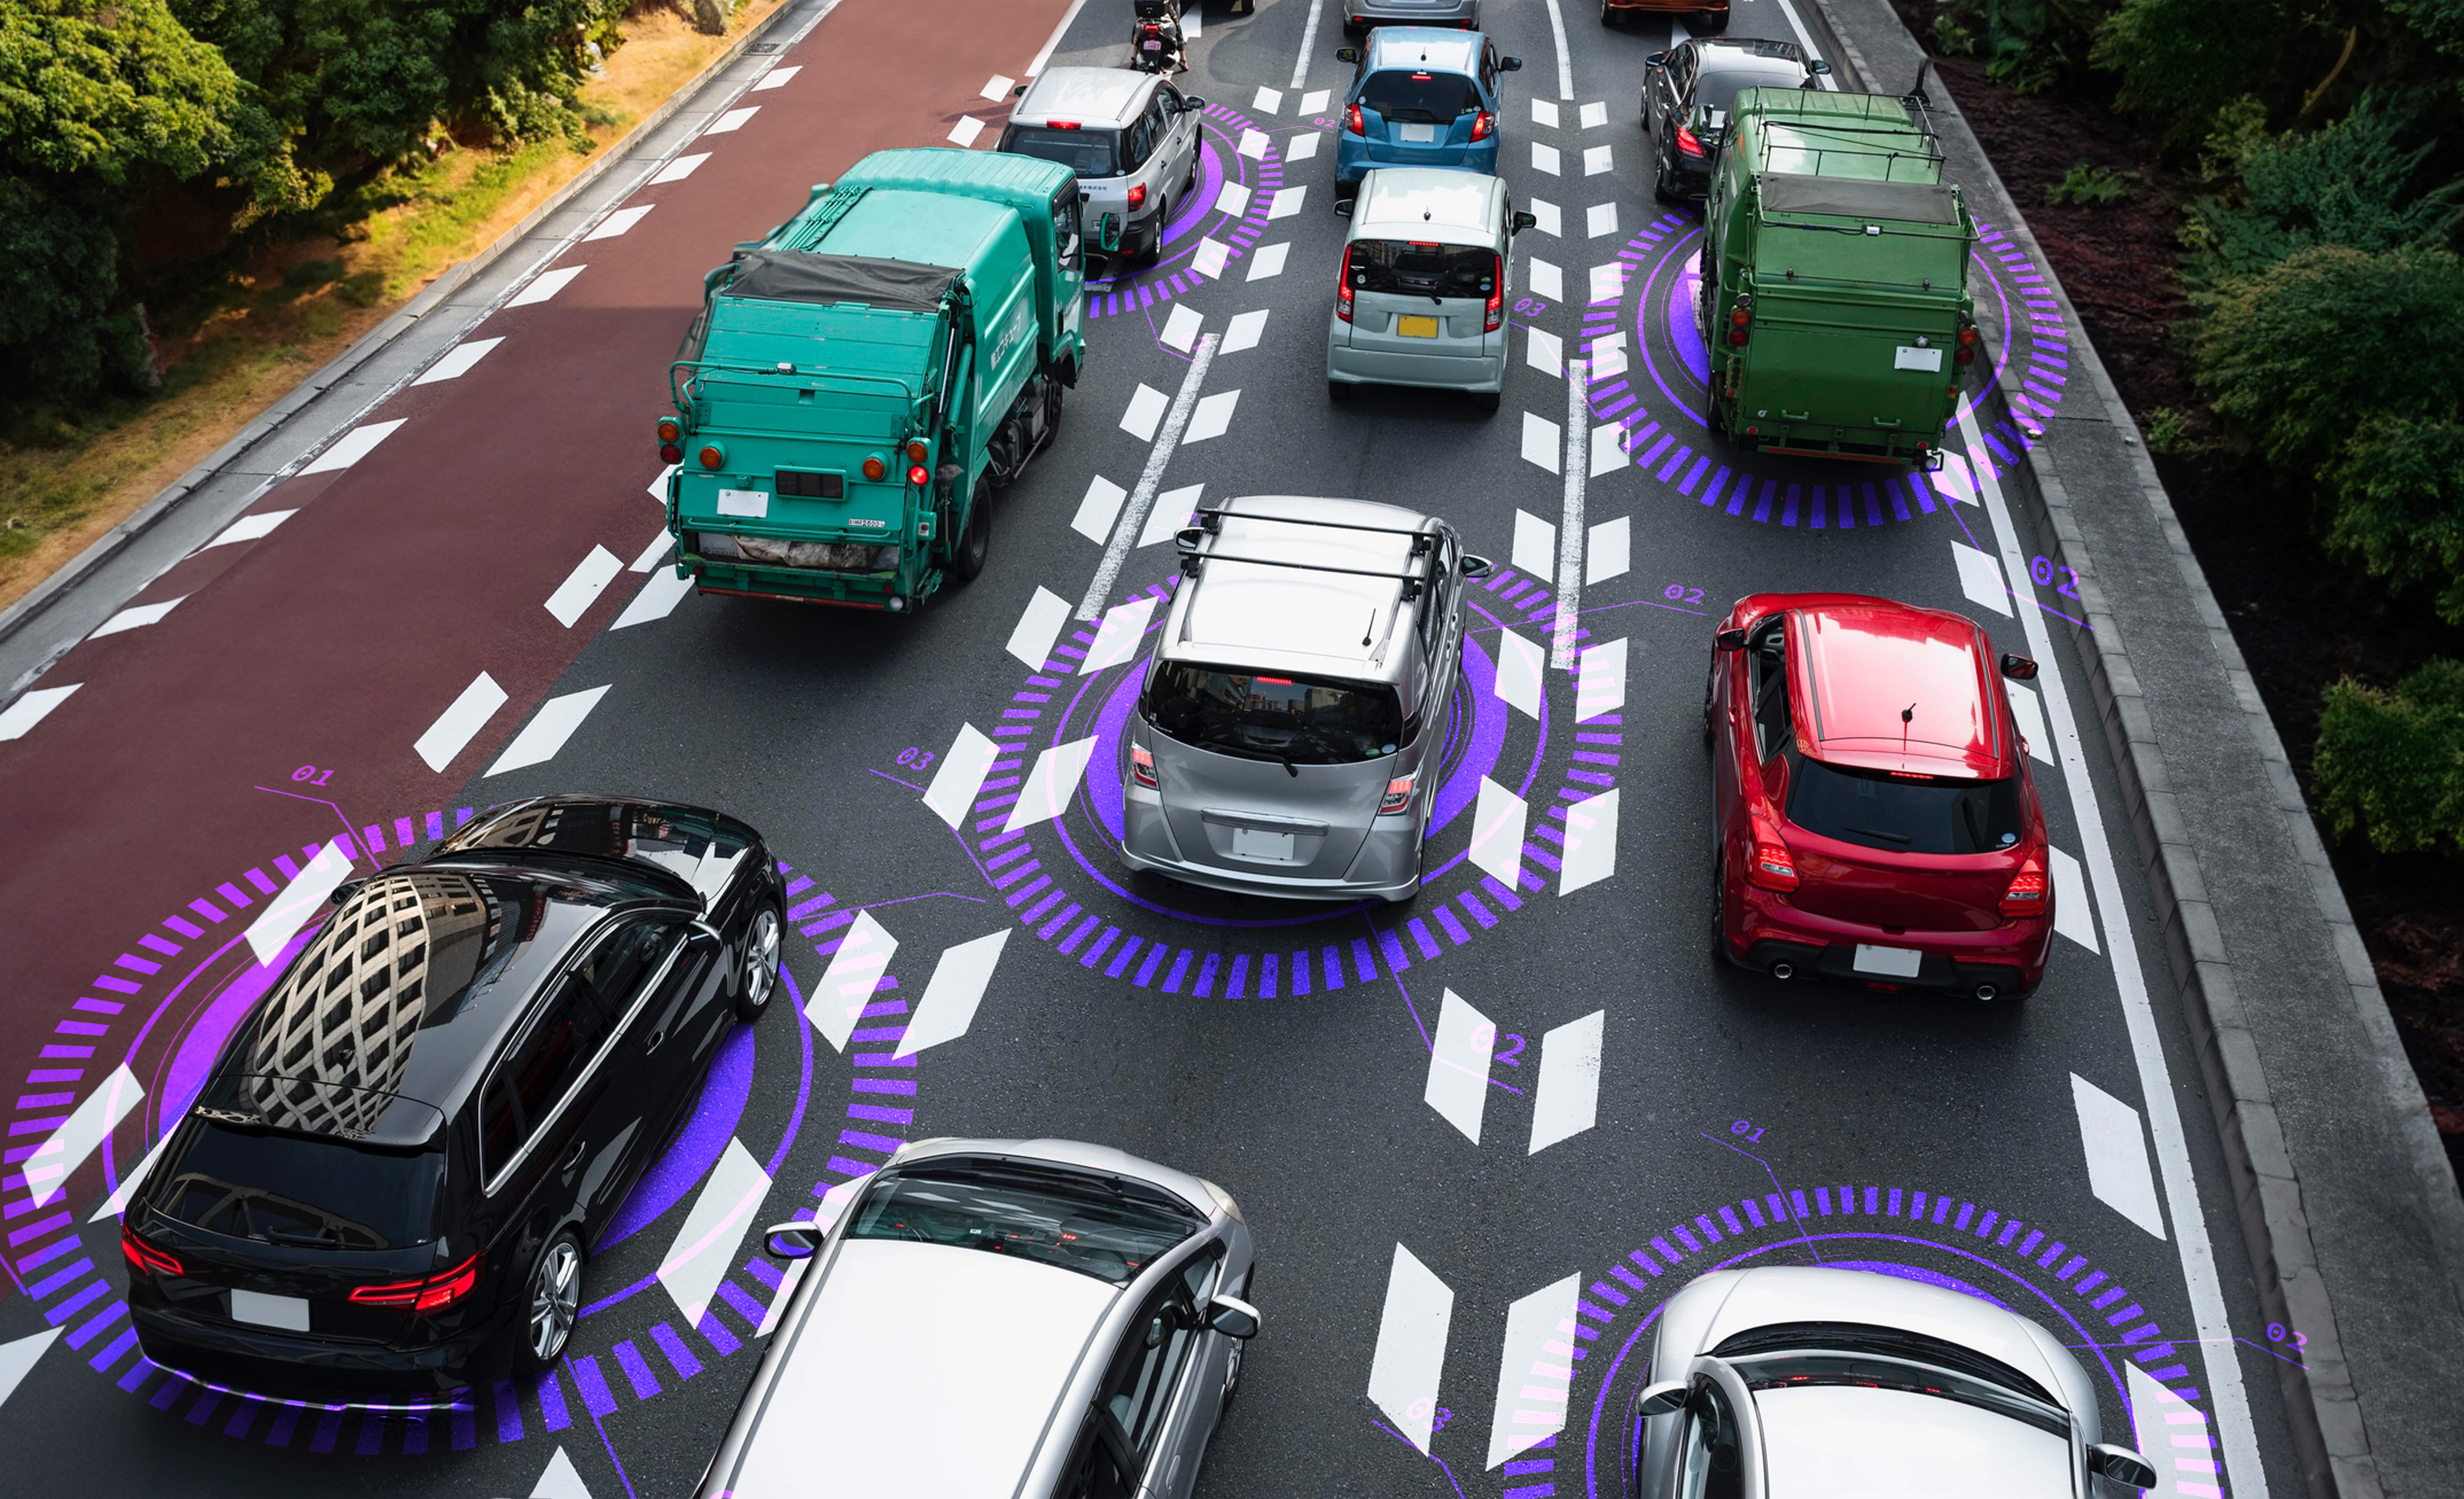 Self-driving car navigating autonomously